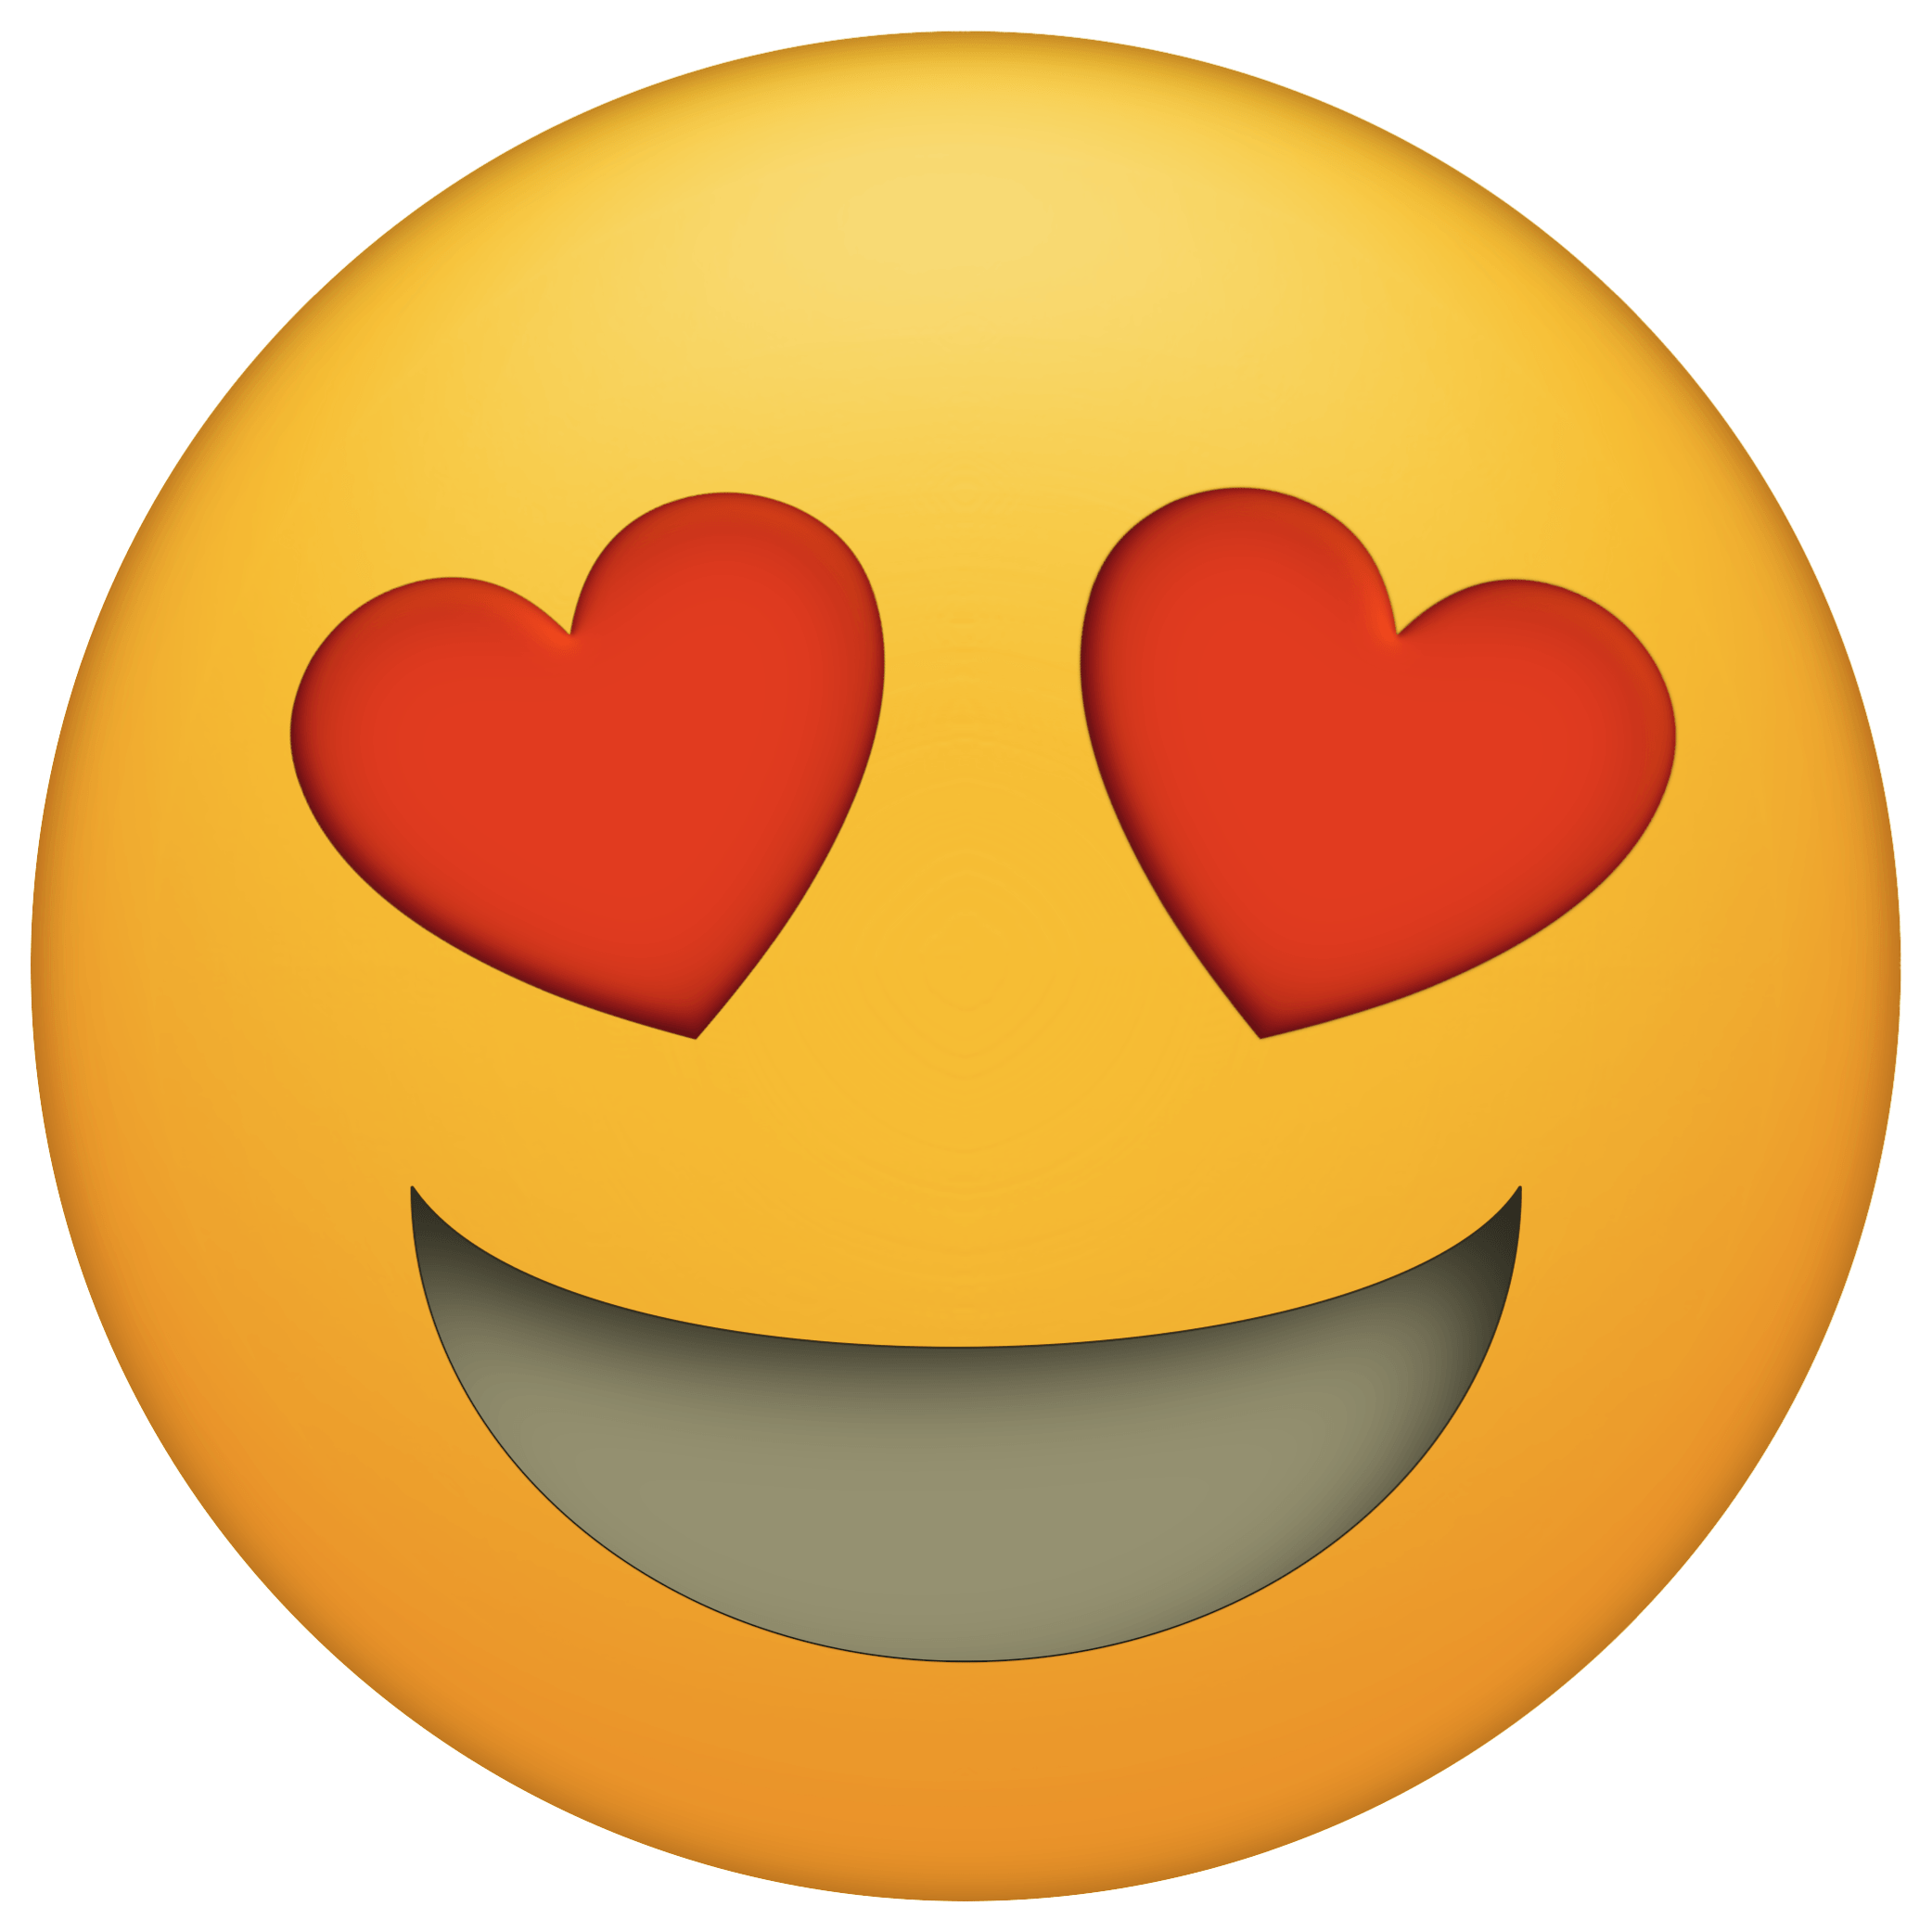 Twitter Emoji Heart PNG High-Quality Image